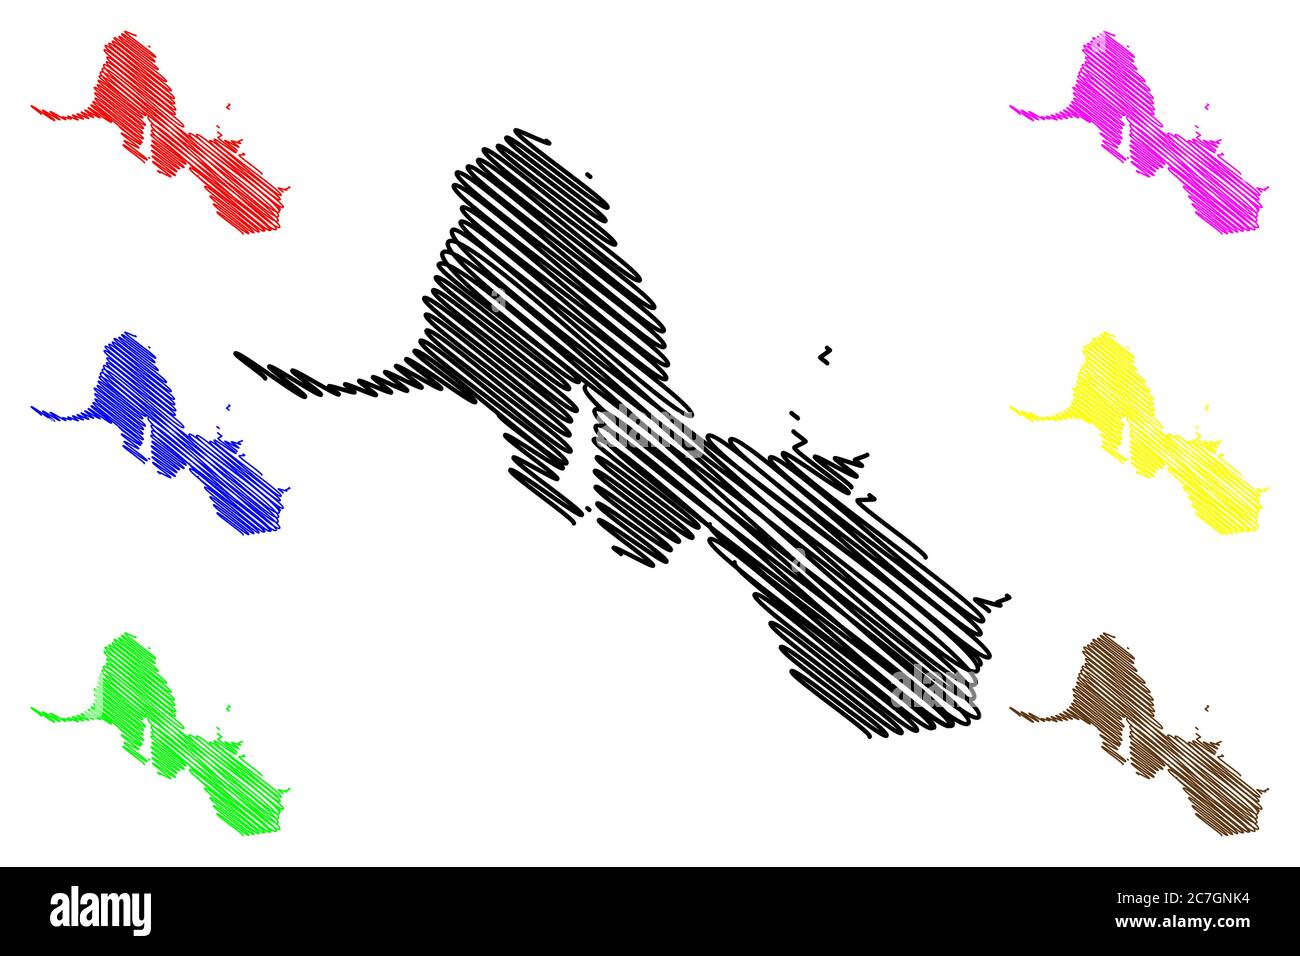 Kalawao County, Hawaï (comté des États-Unis, États-Unis d'Amérique, États-Unis, États-Unis, île, archipel) illustration vectorielle de carte, esquisse de gribble Kalapapa Illustration de Vecteur